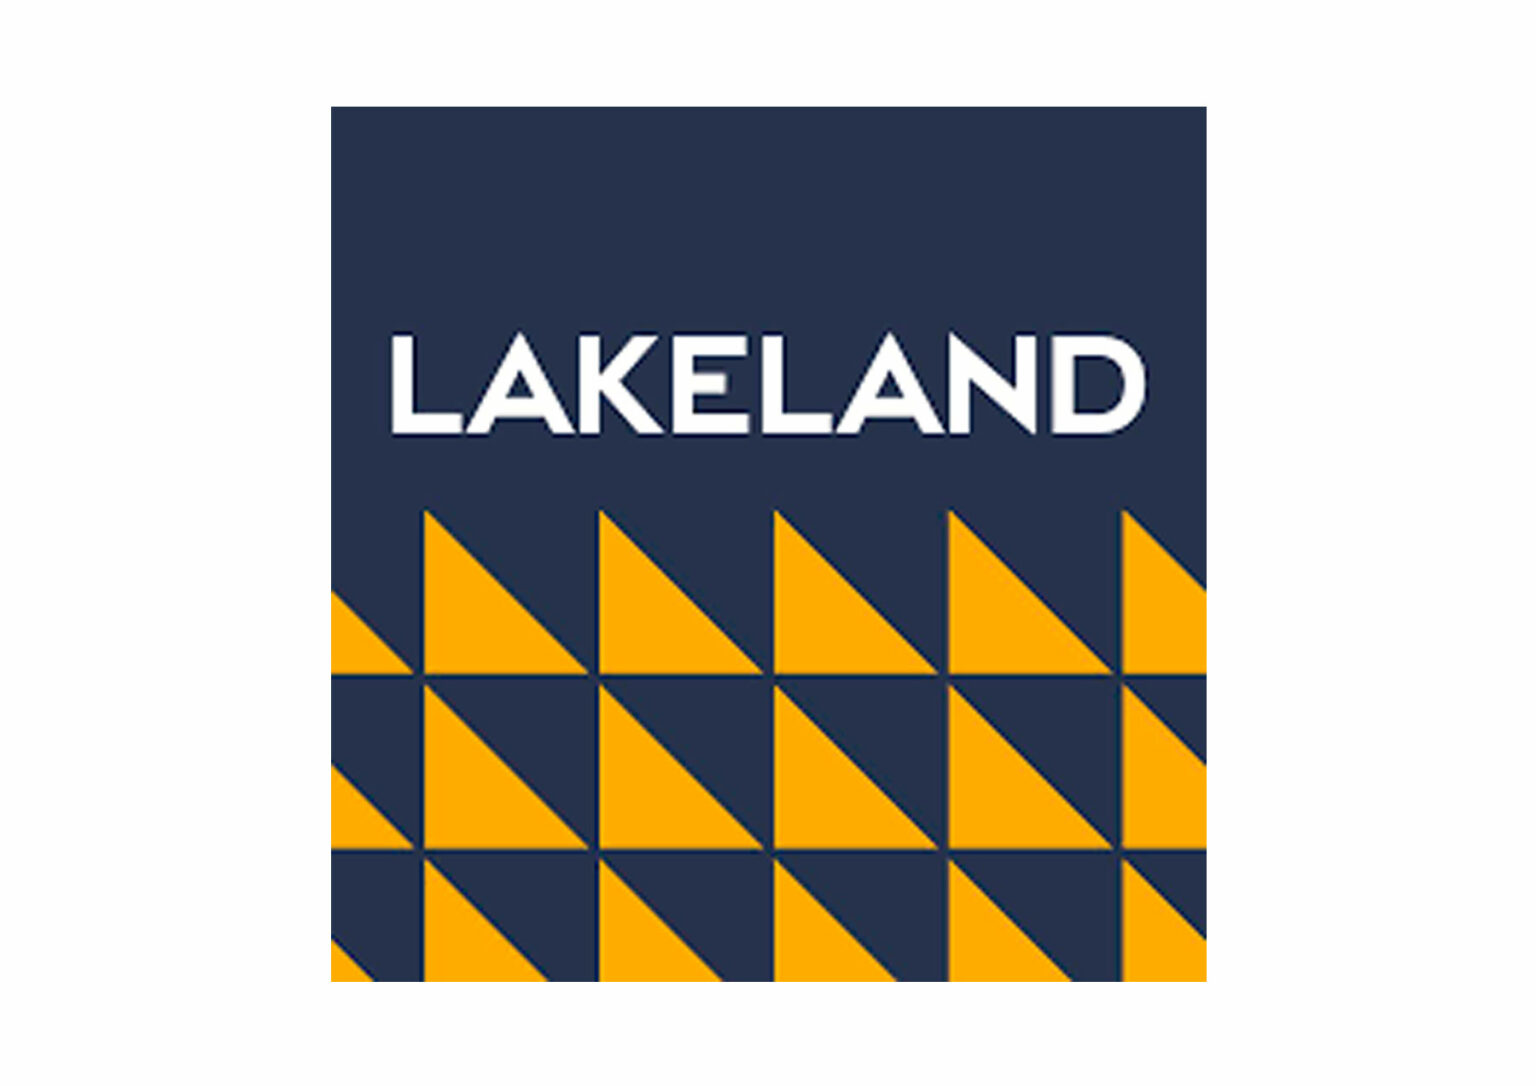 lakeland referral logo